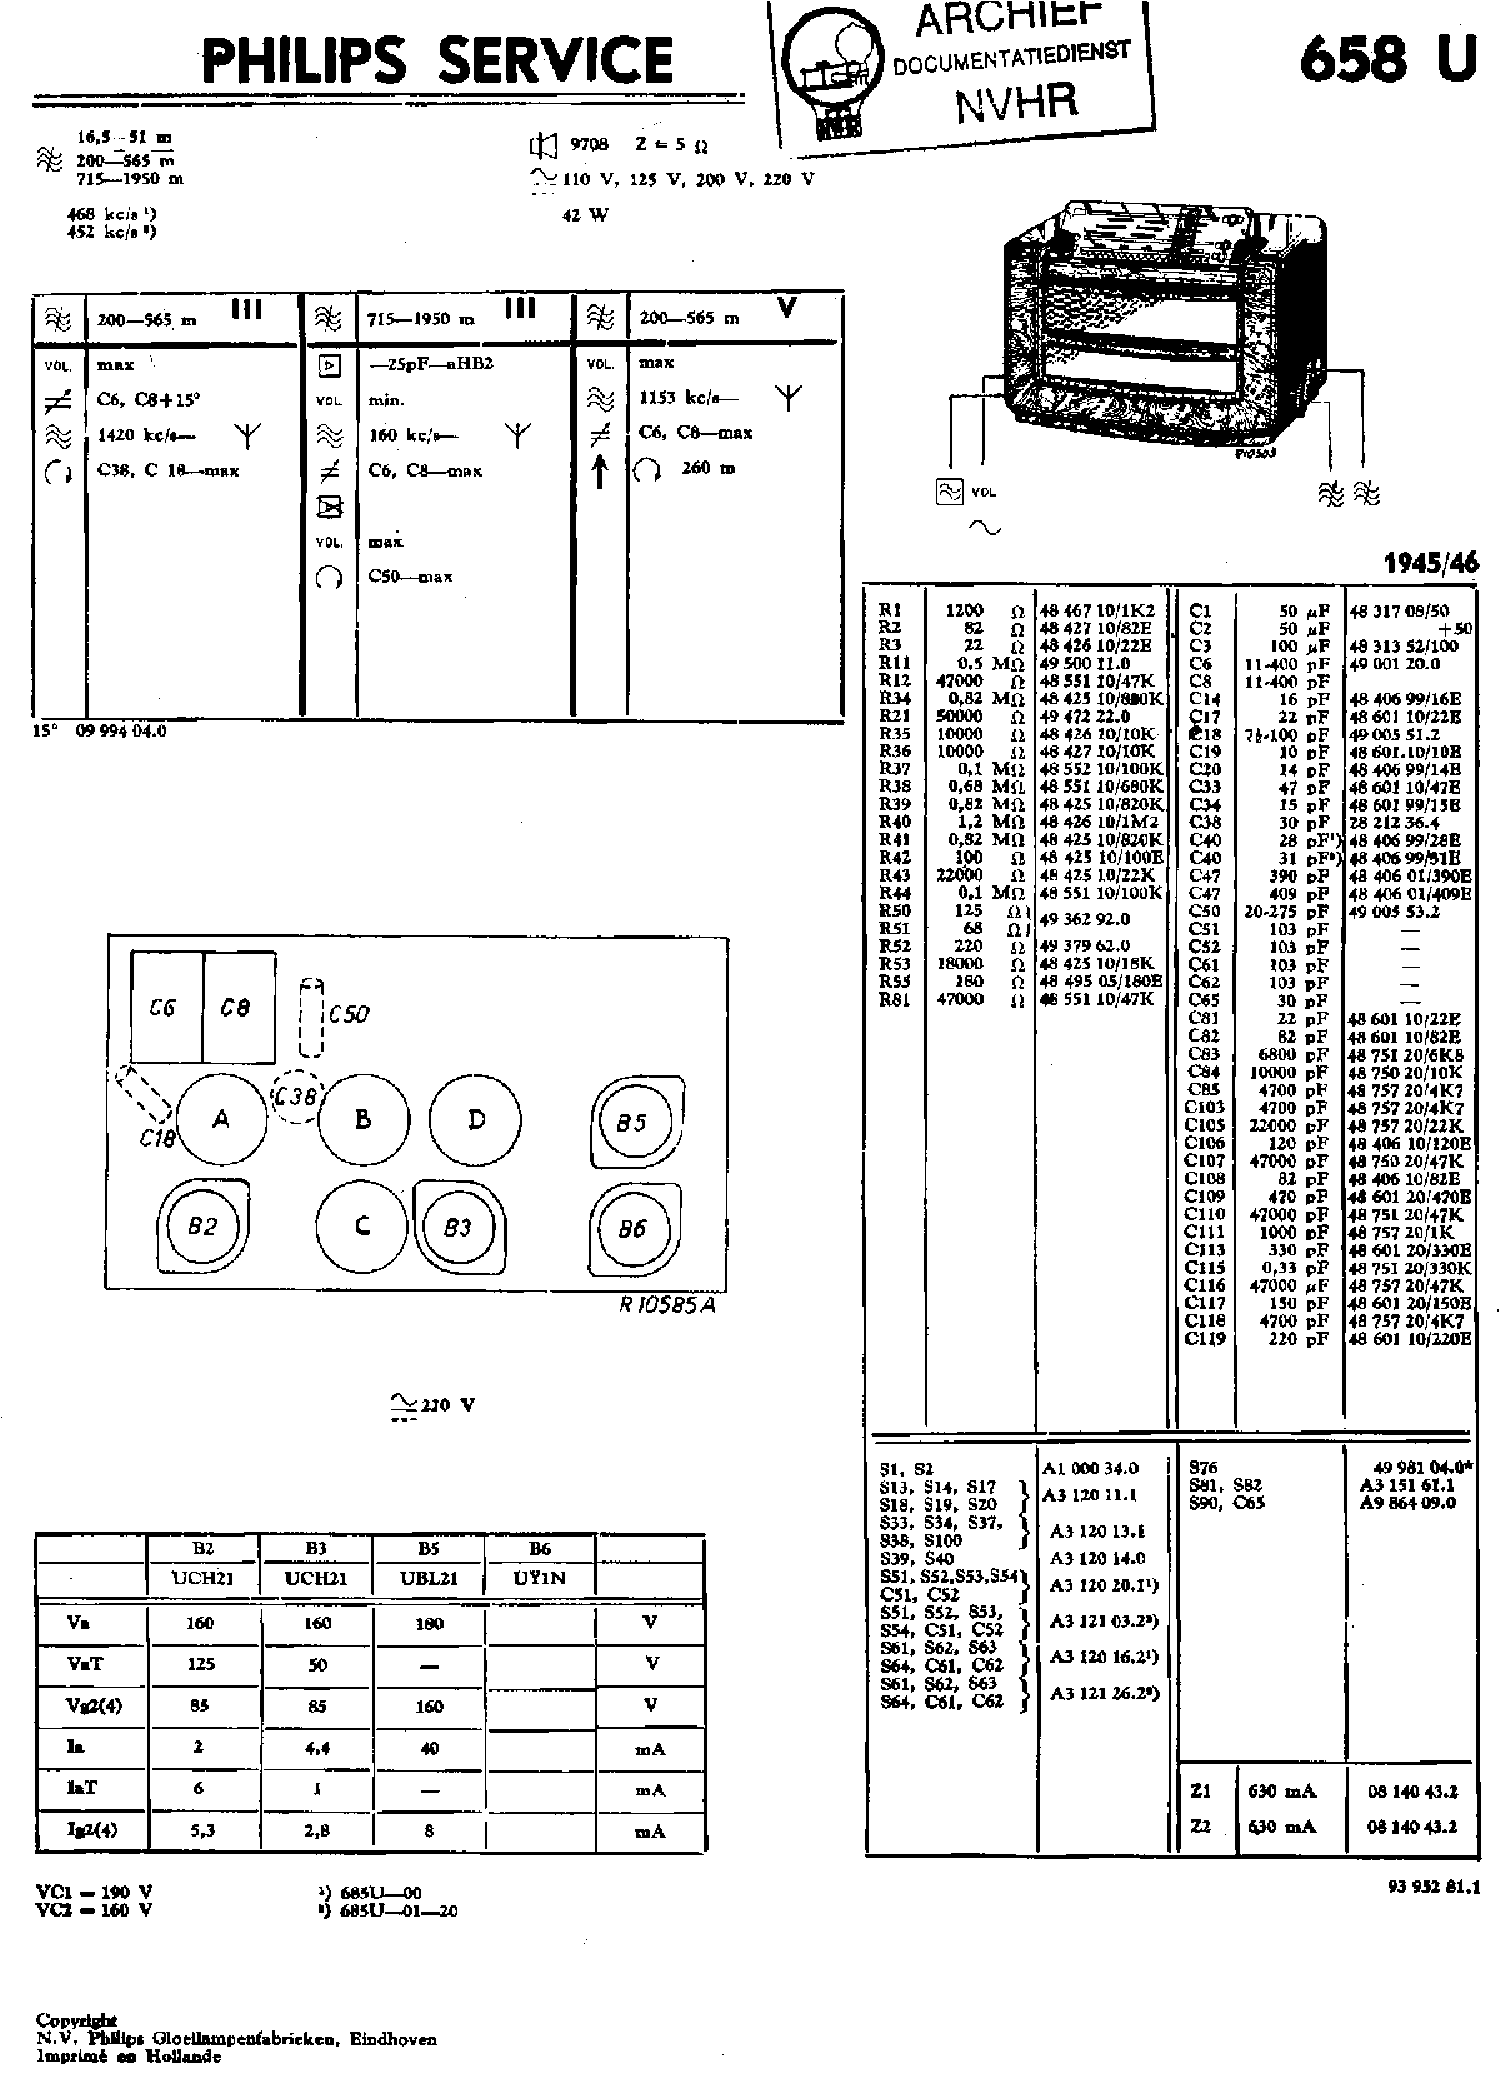 PHILIPS 658U AC-DC RECEIVER 1945 SM service manual (1st page)